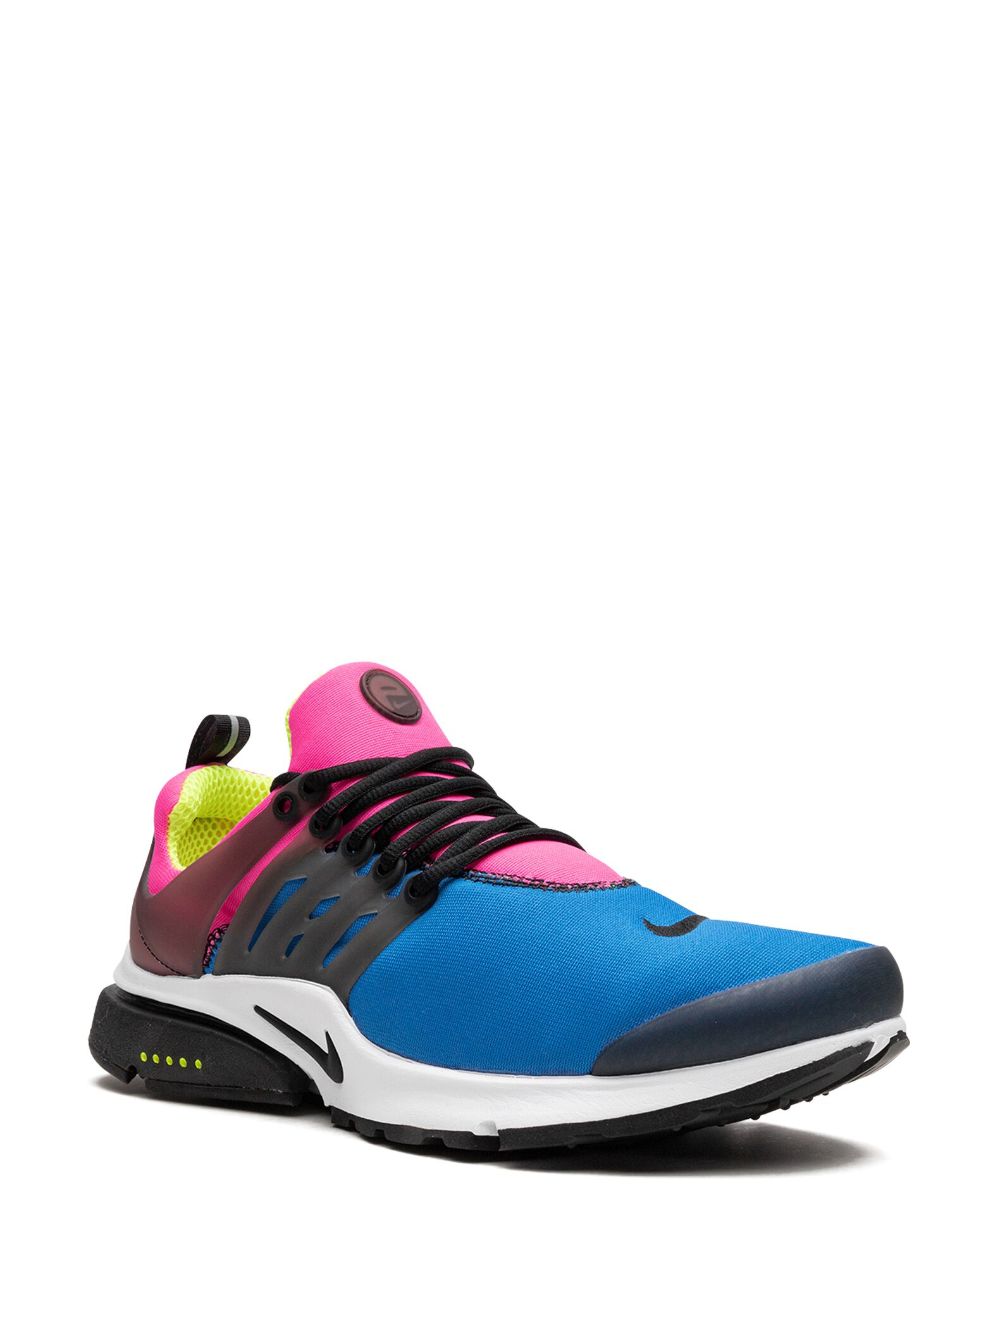 Shop Nike Air Presto "pink/blue Volt" Sneakers